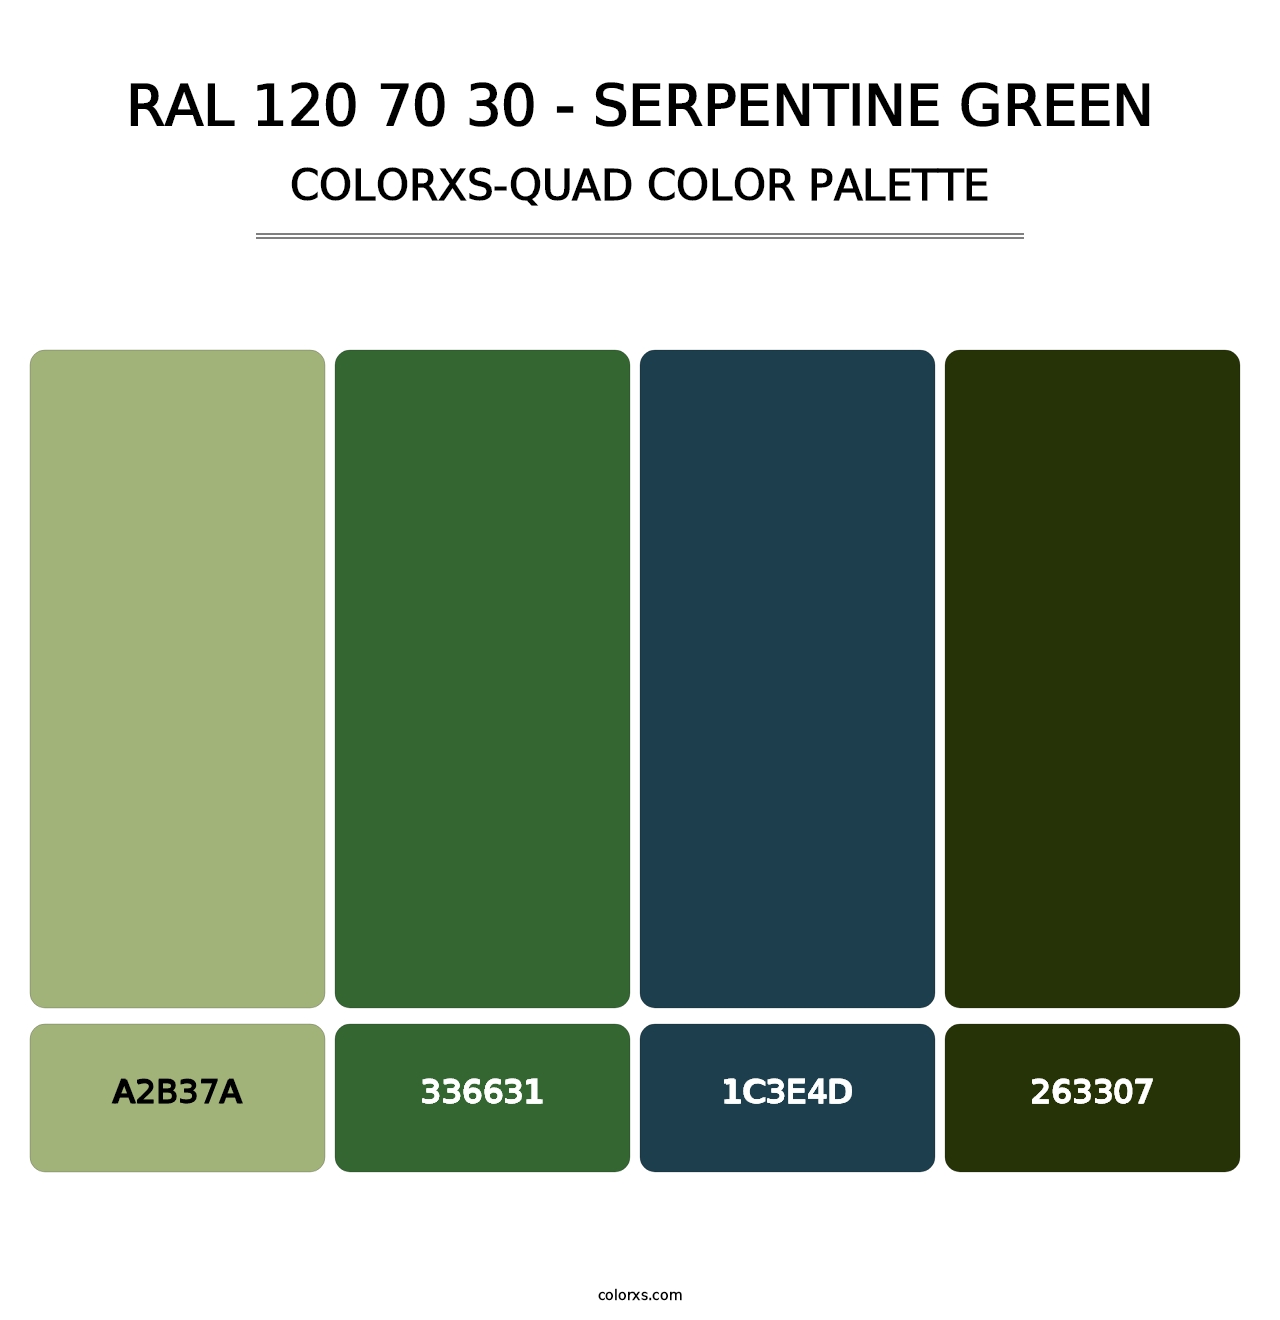 RAL 120 70 30 - Serpentine Green - Colorxs Quad Palette